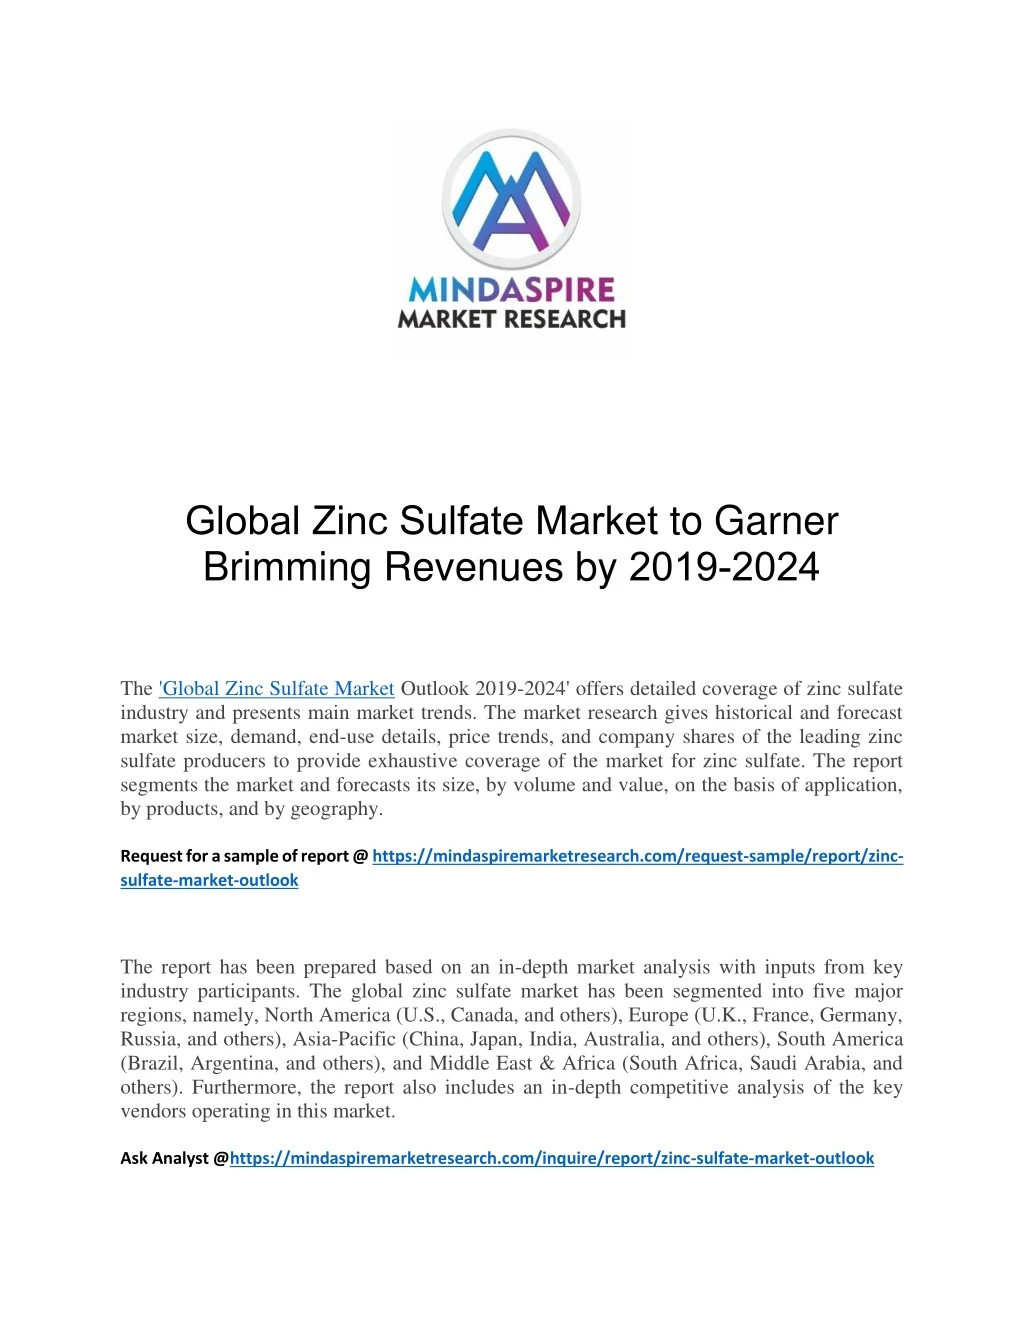 global zinc sulfate market to garner brimming